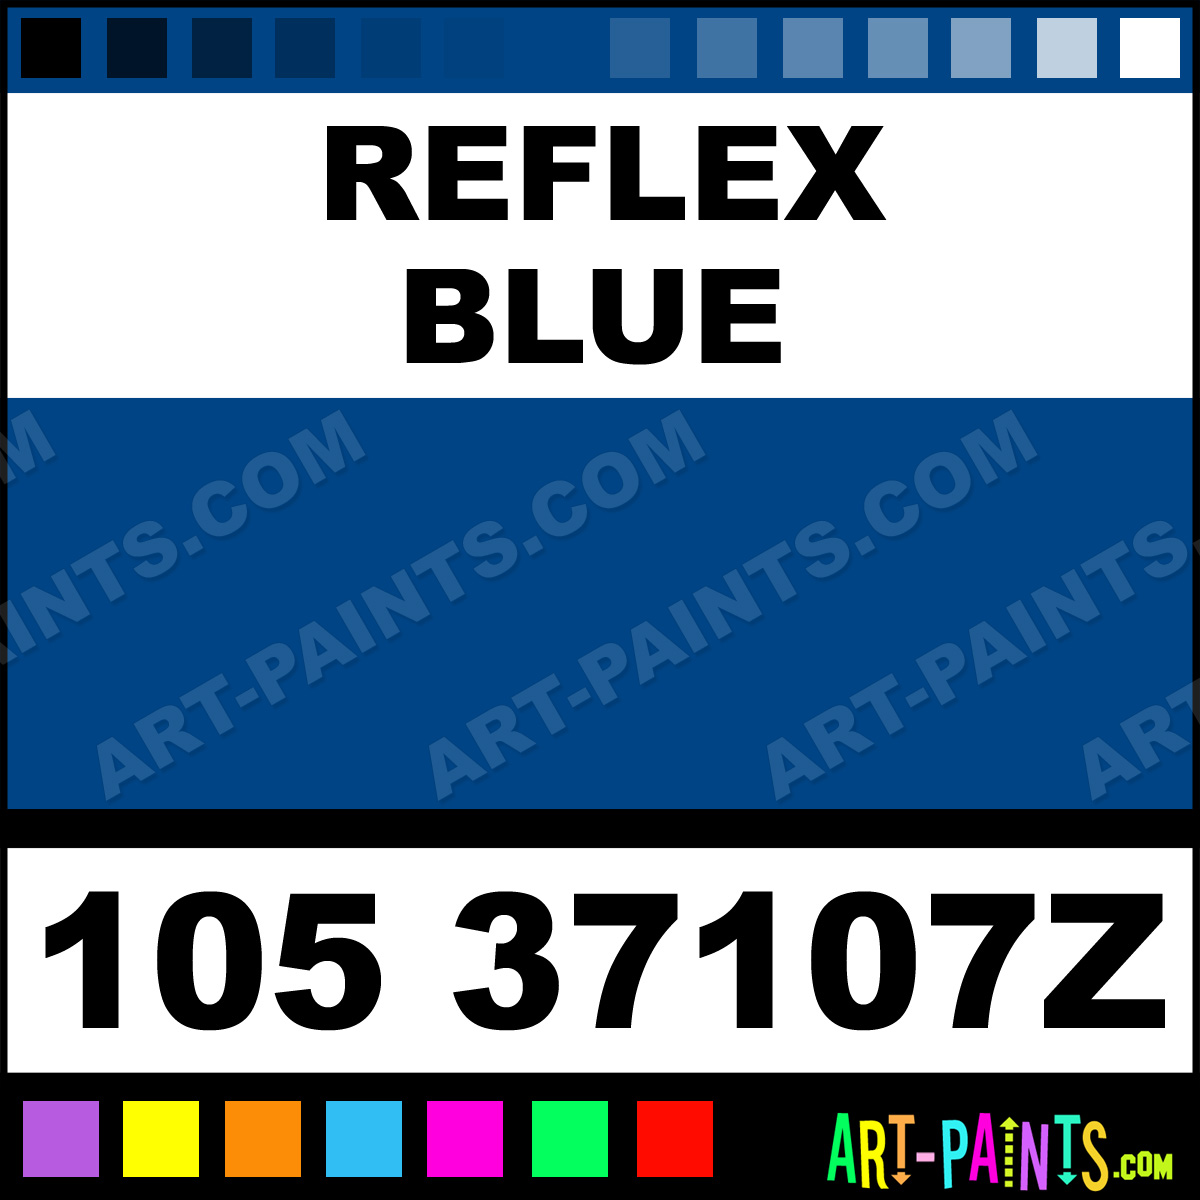 Reflex-Blue-lg.jpg